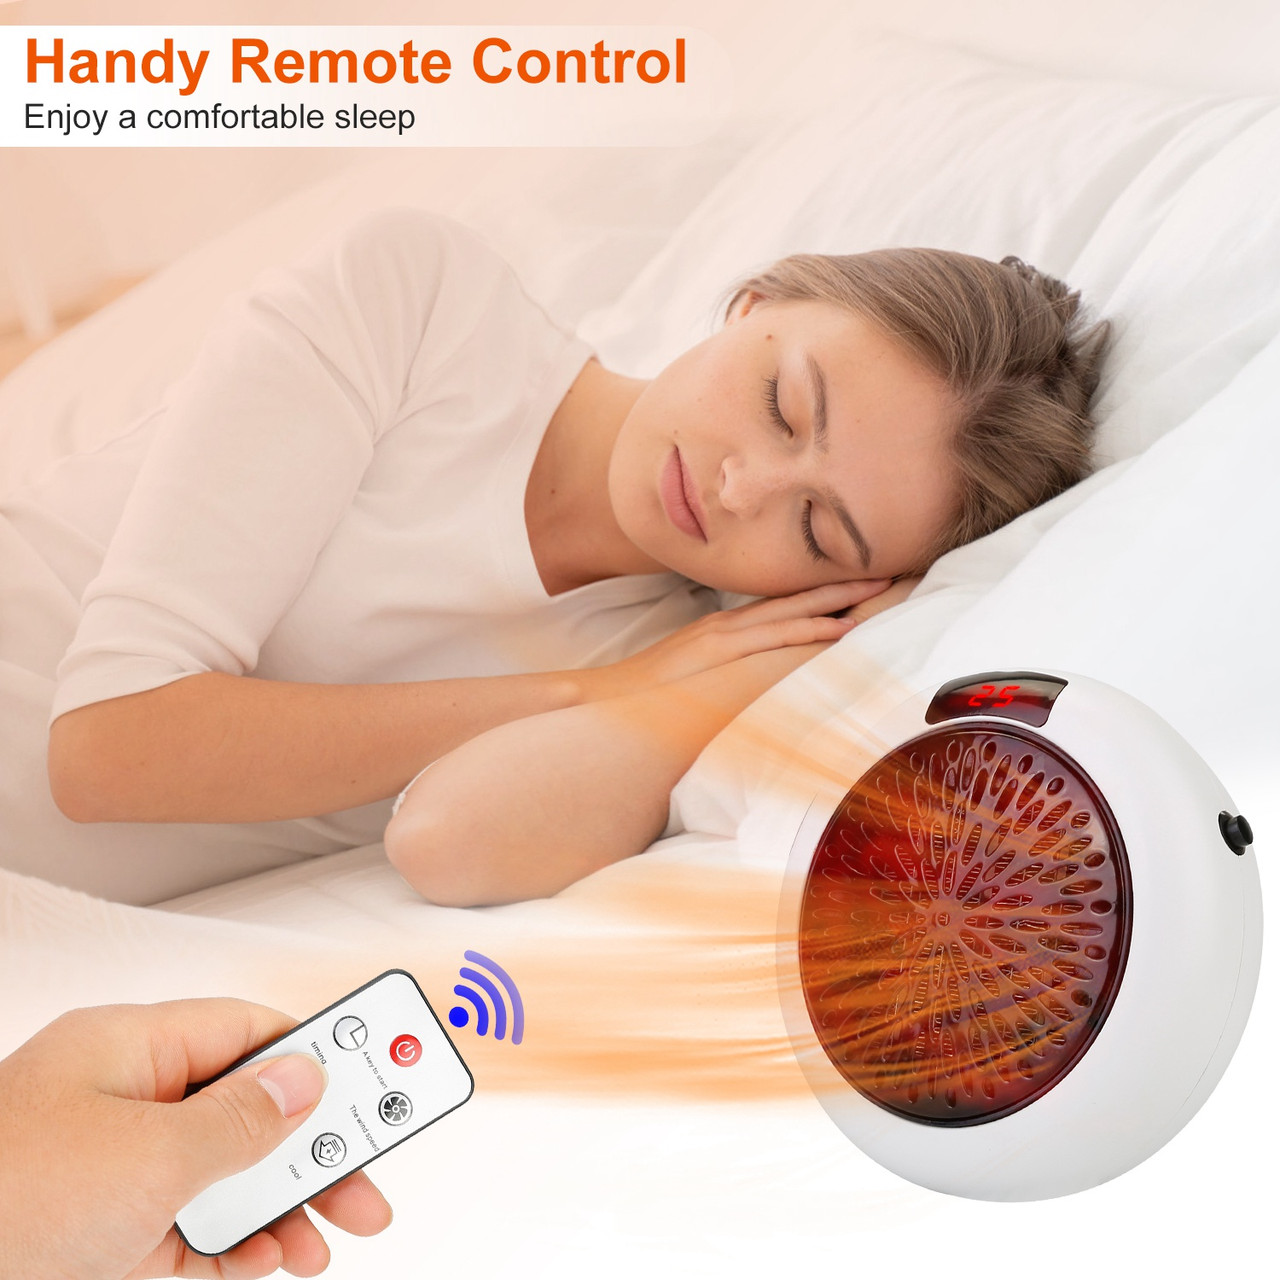 iMounTEK® 900W Portable Heater Fan product image